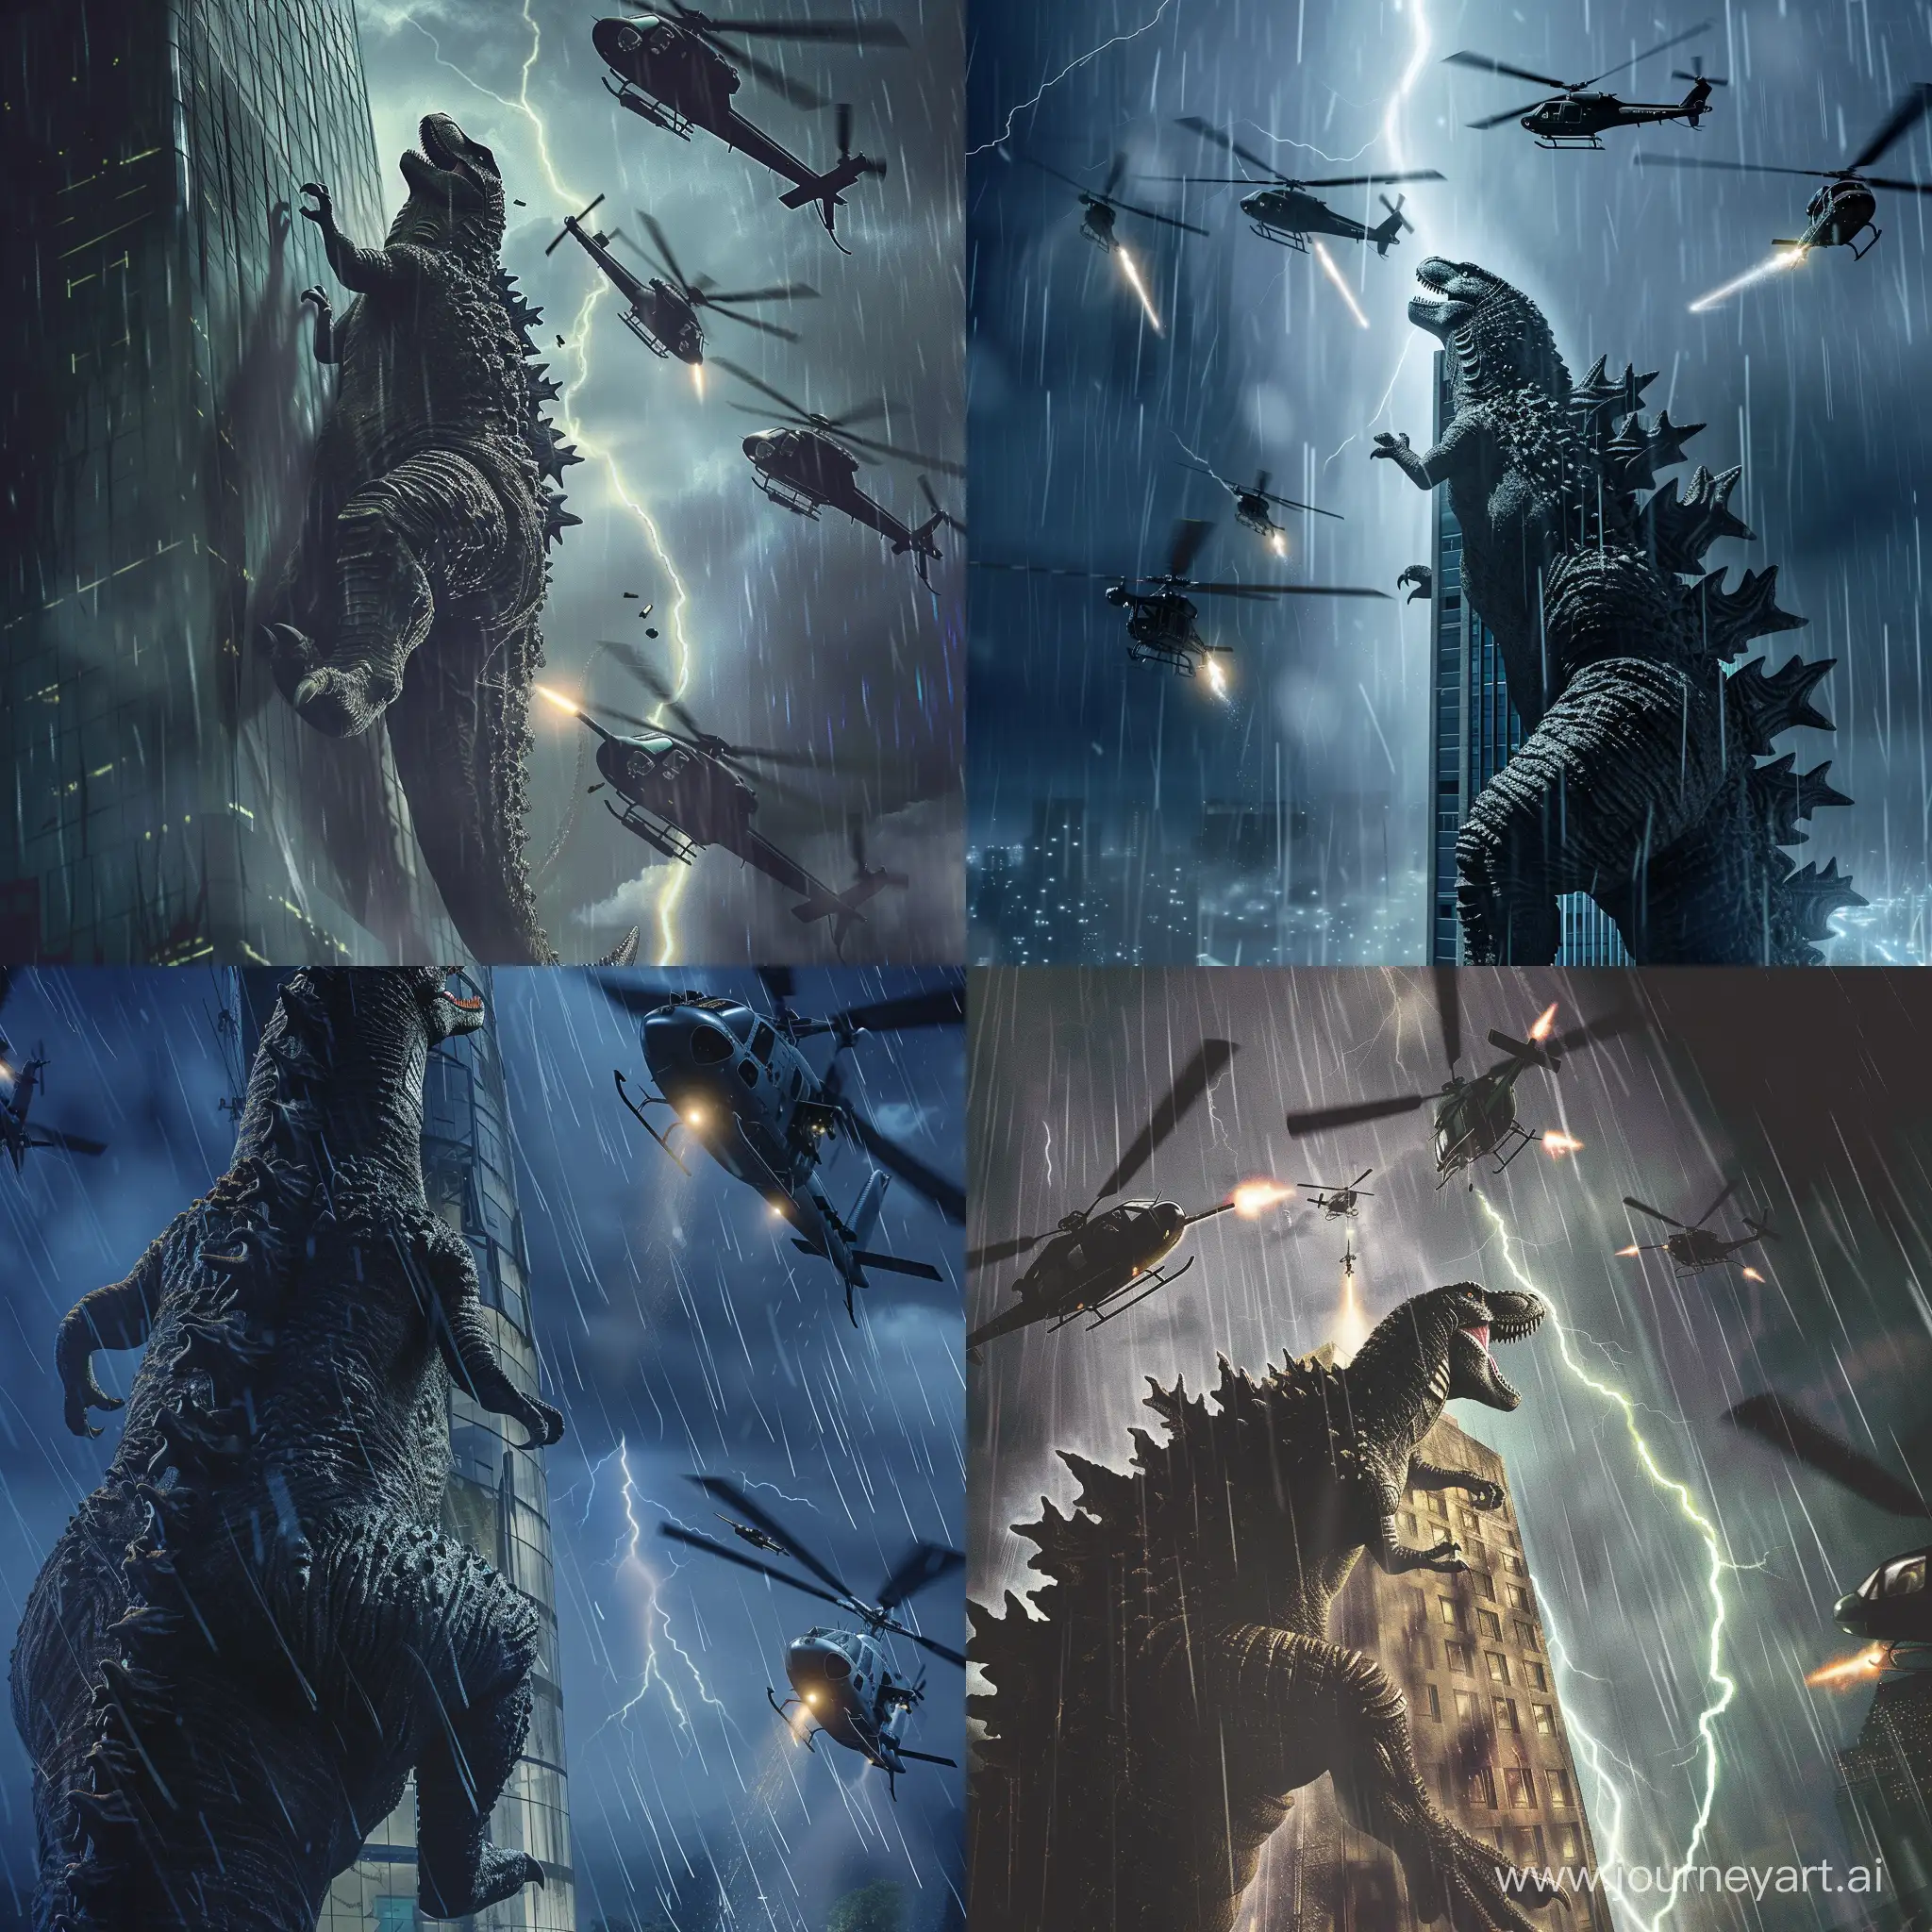 Epic-Night-Battle-Godzillasaurus-Rex-vs-Military-Helicopters